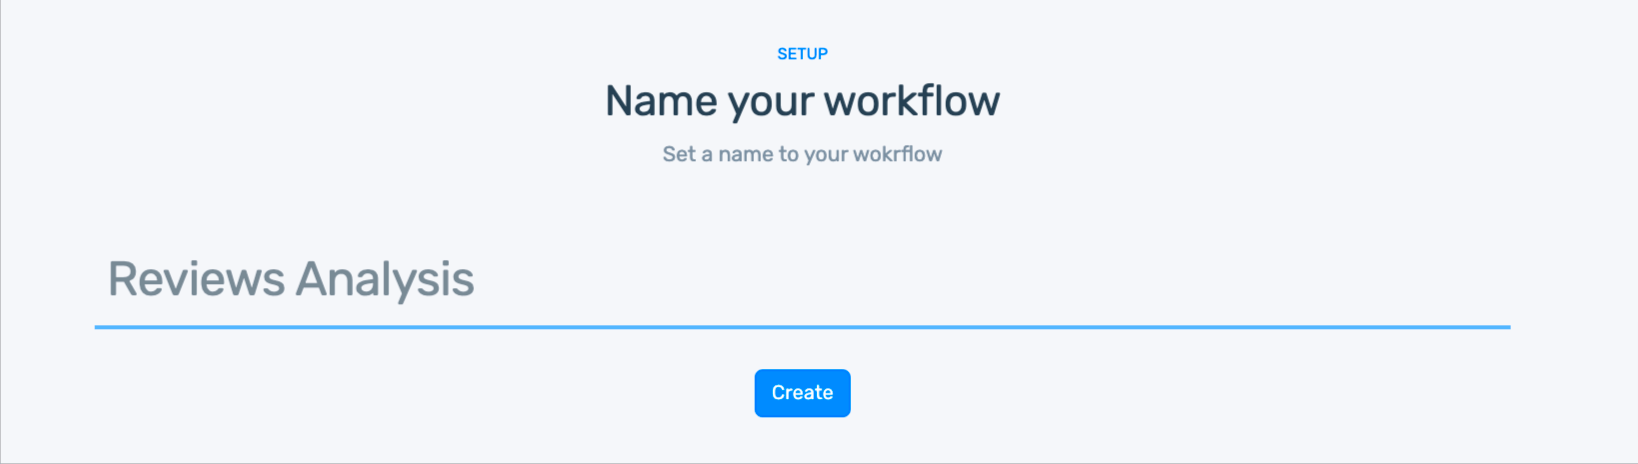 Name you workflow: Reviews Analysis.